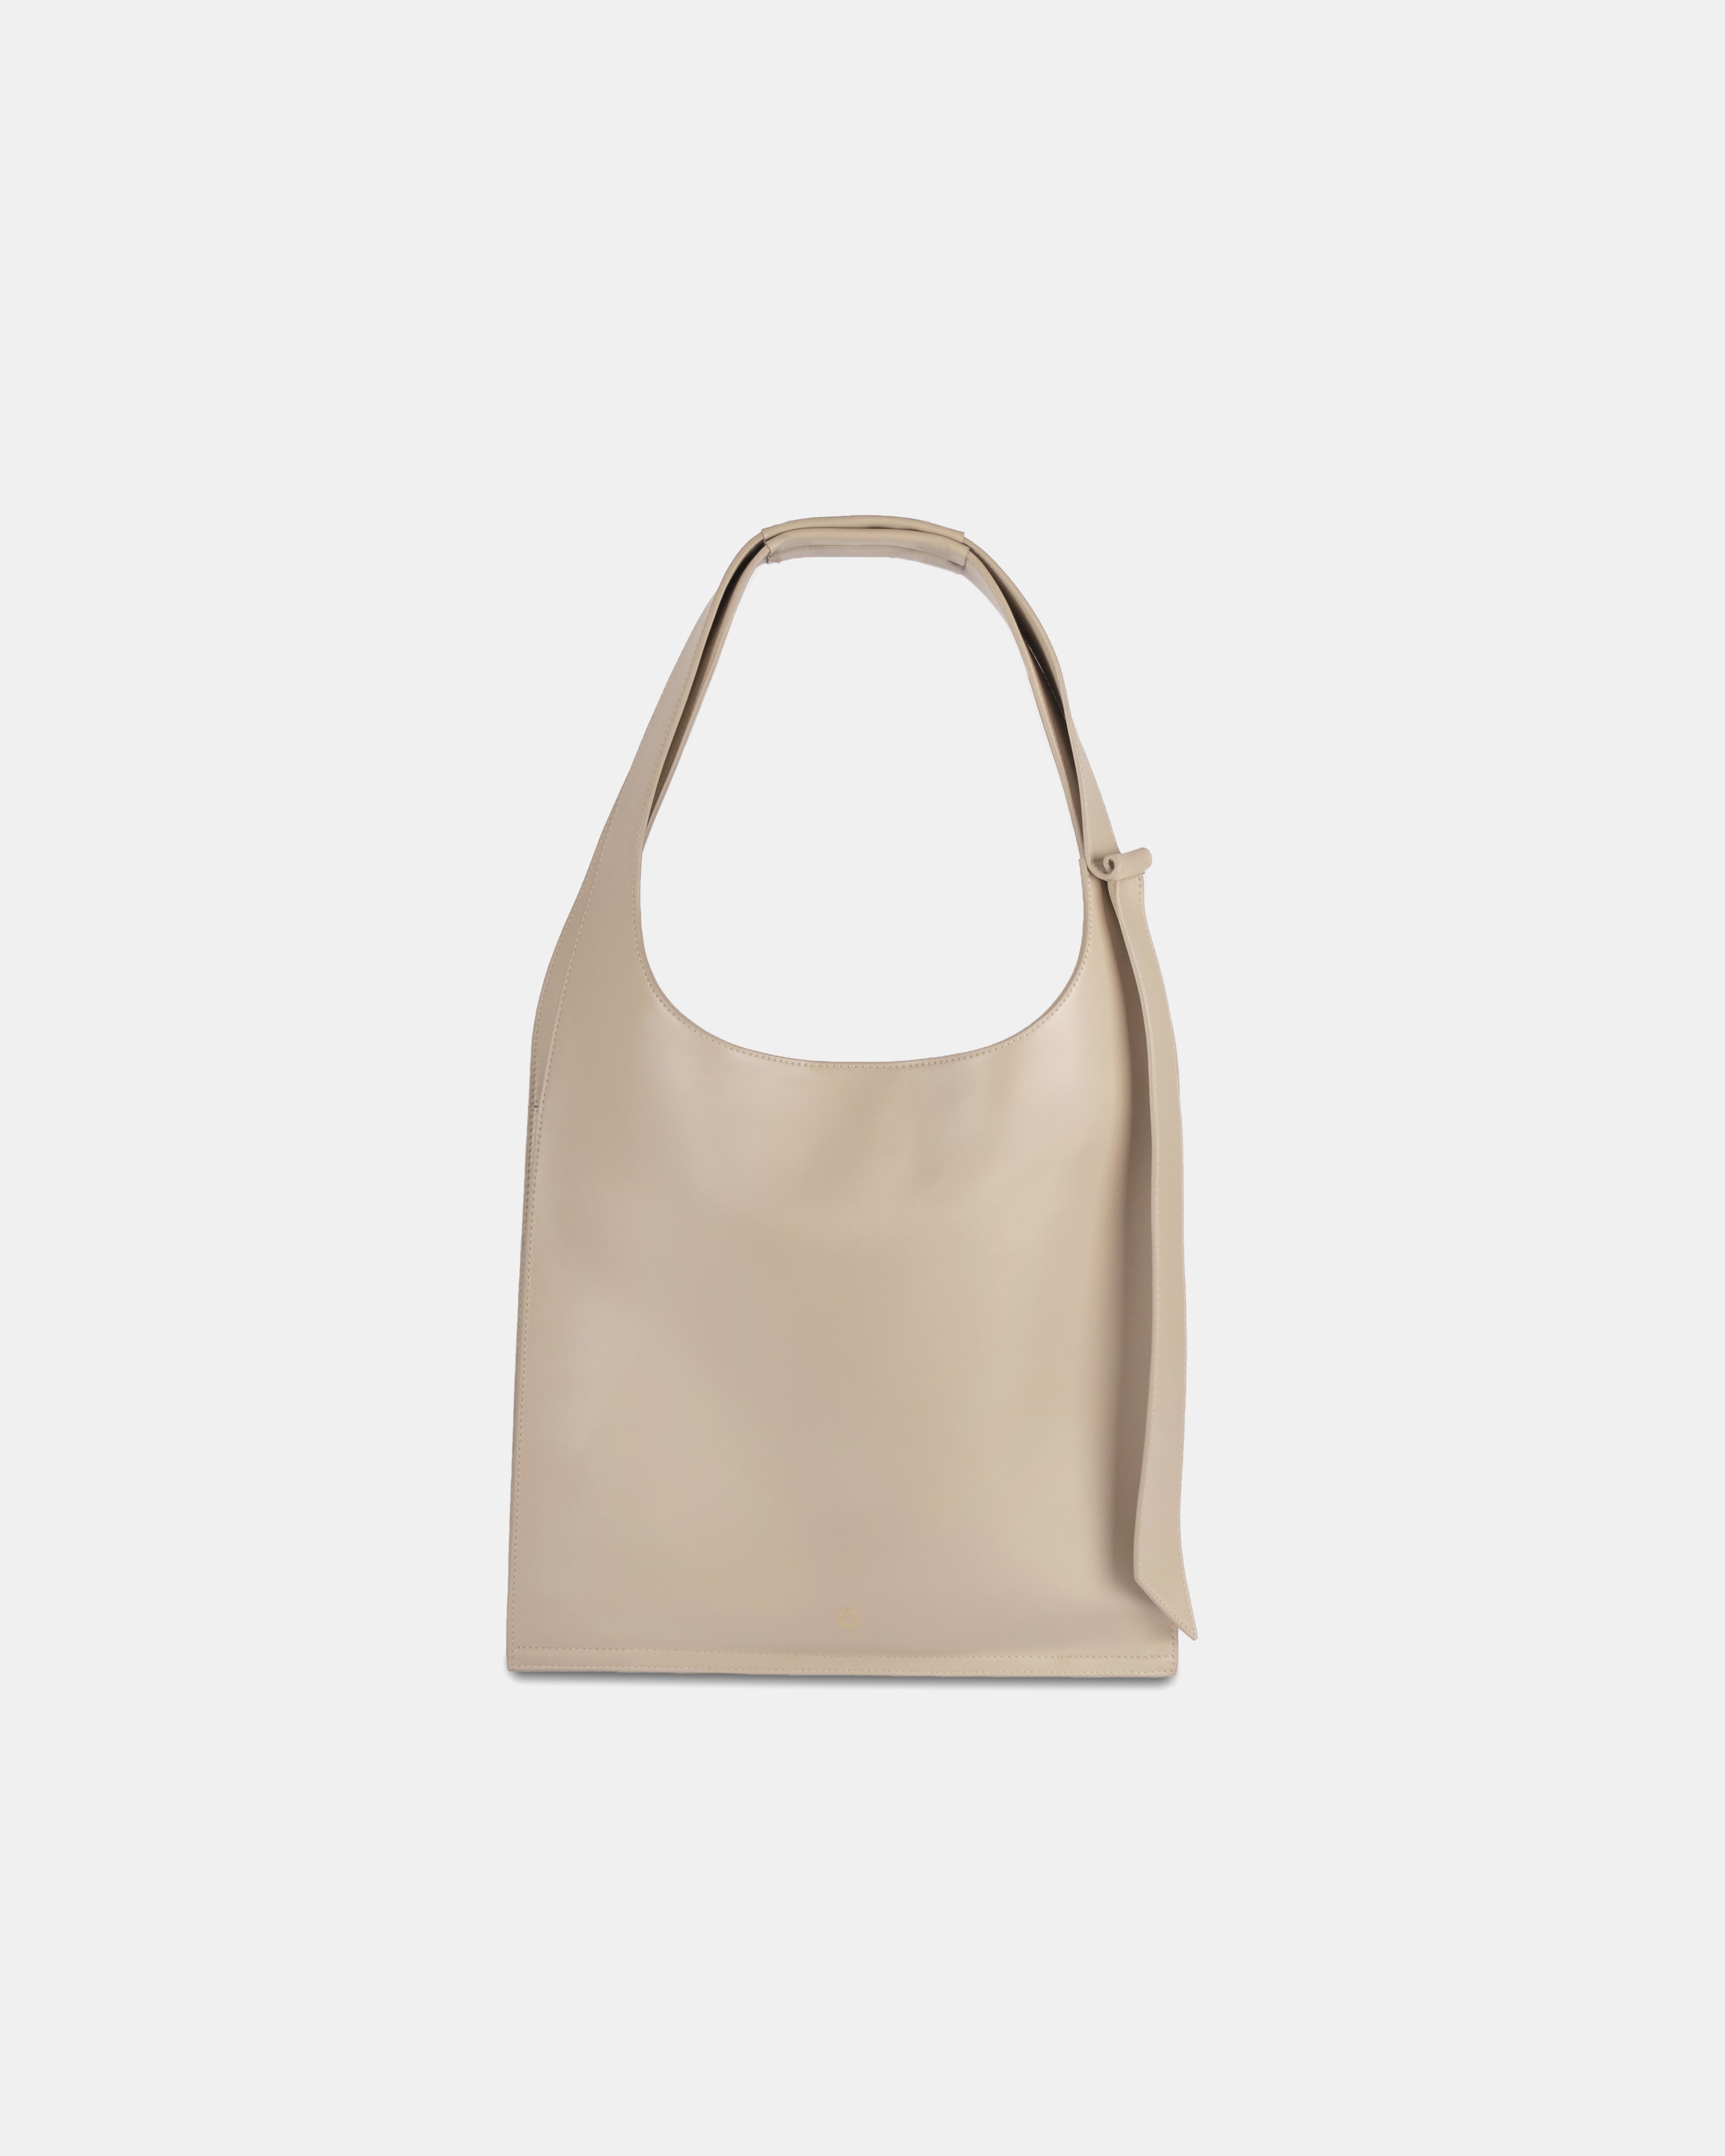 BO Shopper Black - Designer Vegan Leather Bags – O.N.E Concepts